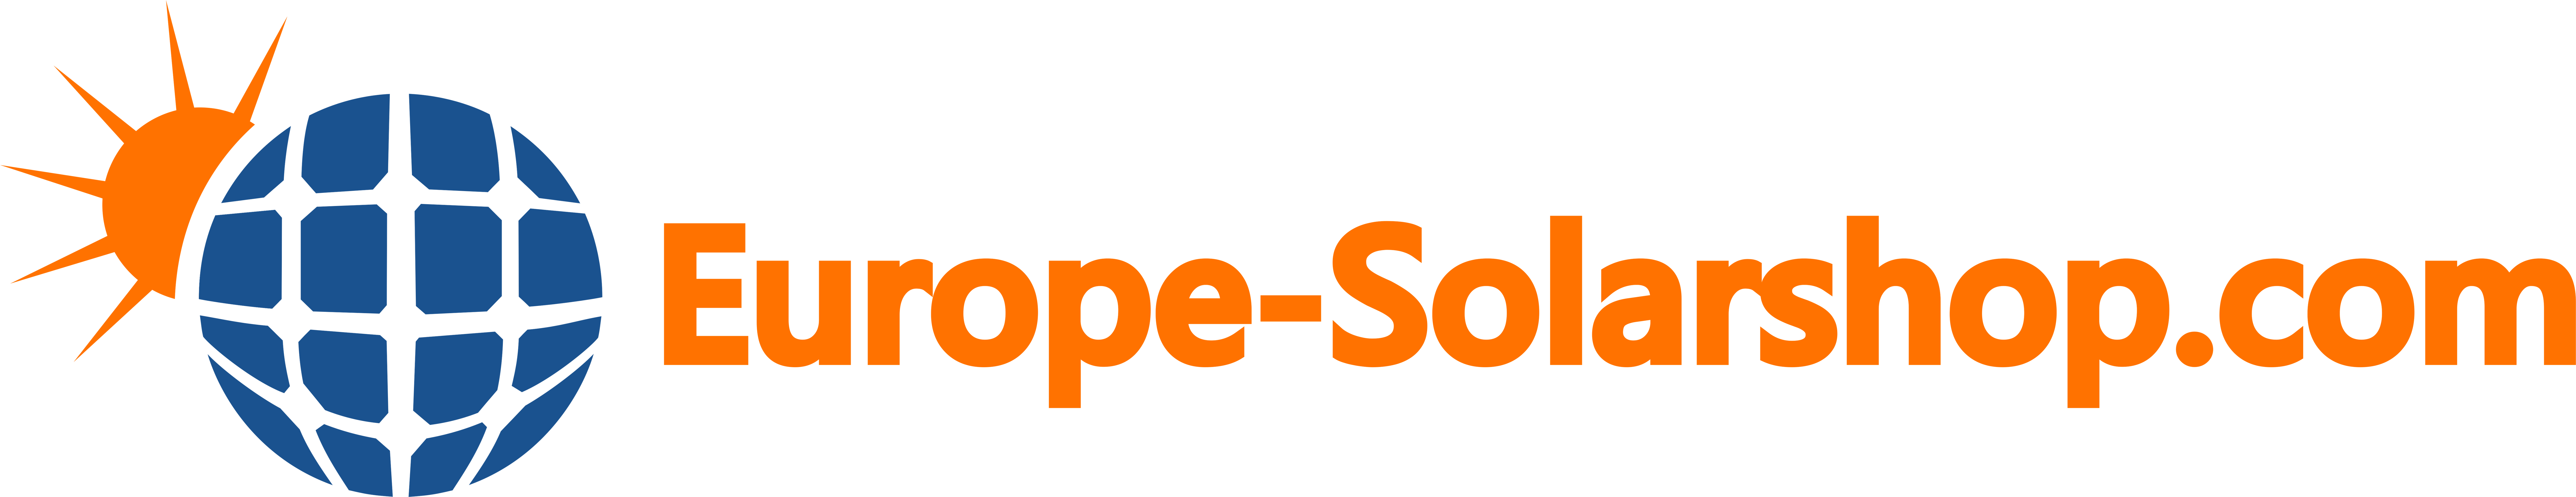 Europe-SolarShop.com